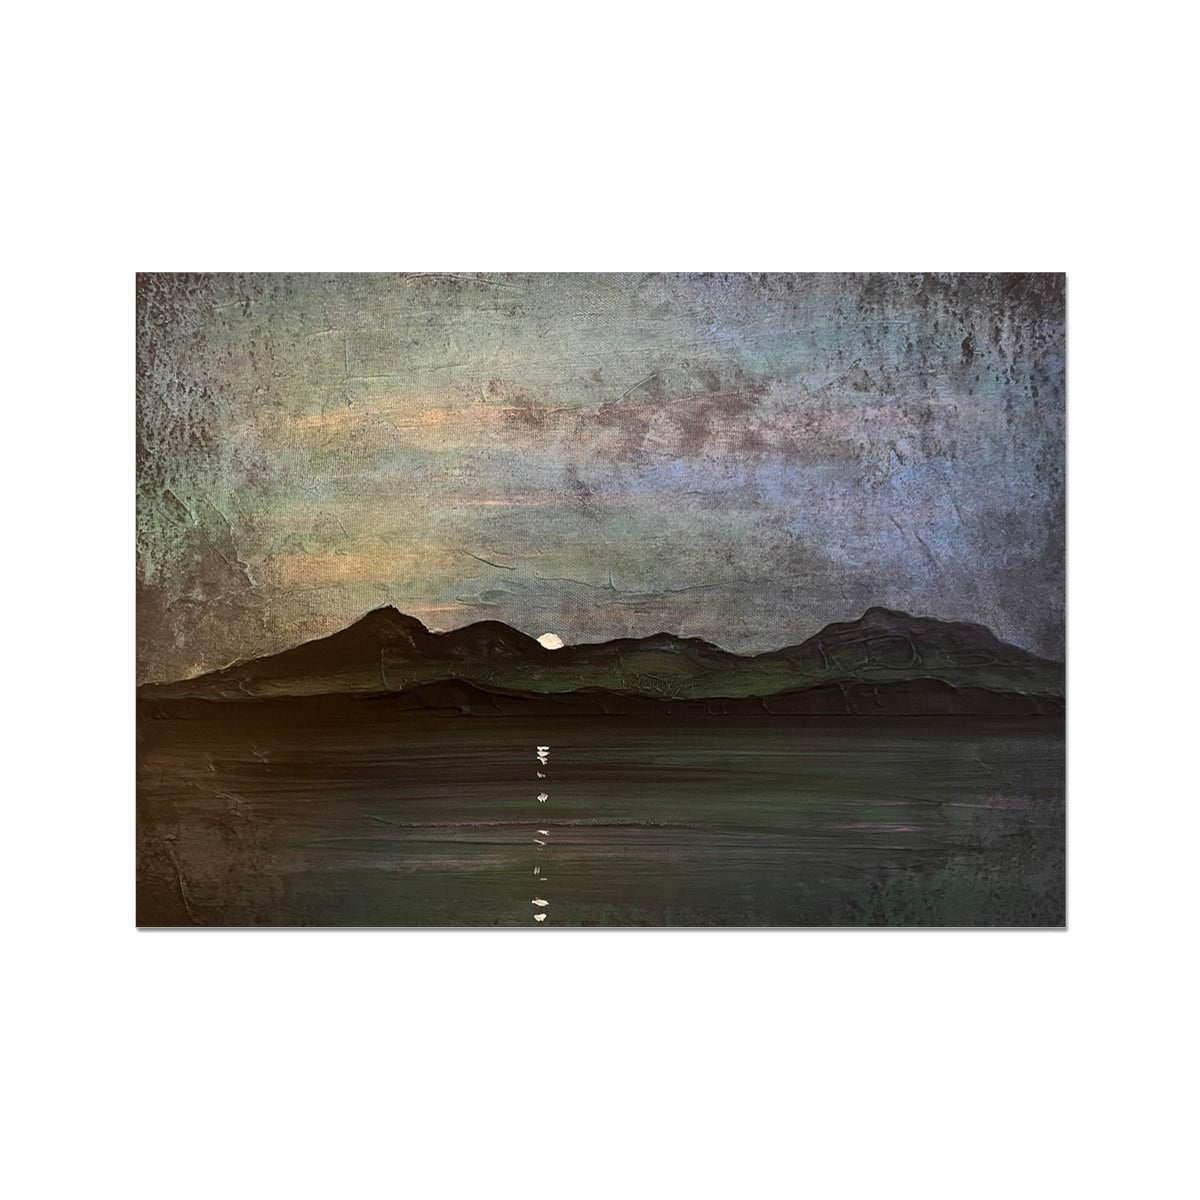 Sleeping Warrior Moonlight Arran Painting | Fine Art Prints From Scotland-Unframed Prints-Arran Art Gallery-A2 Landscape-Paintings, Prints, Homeware, Art Gifts From Scotland By Scottish Artist Kevin Hunter